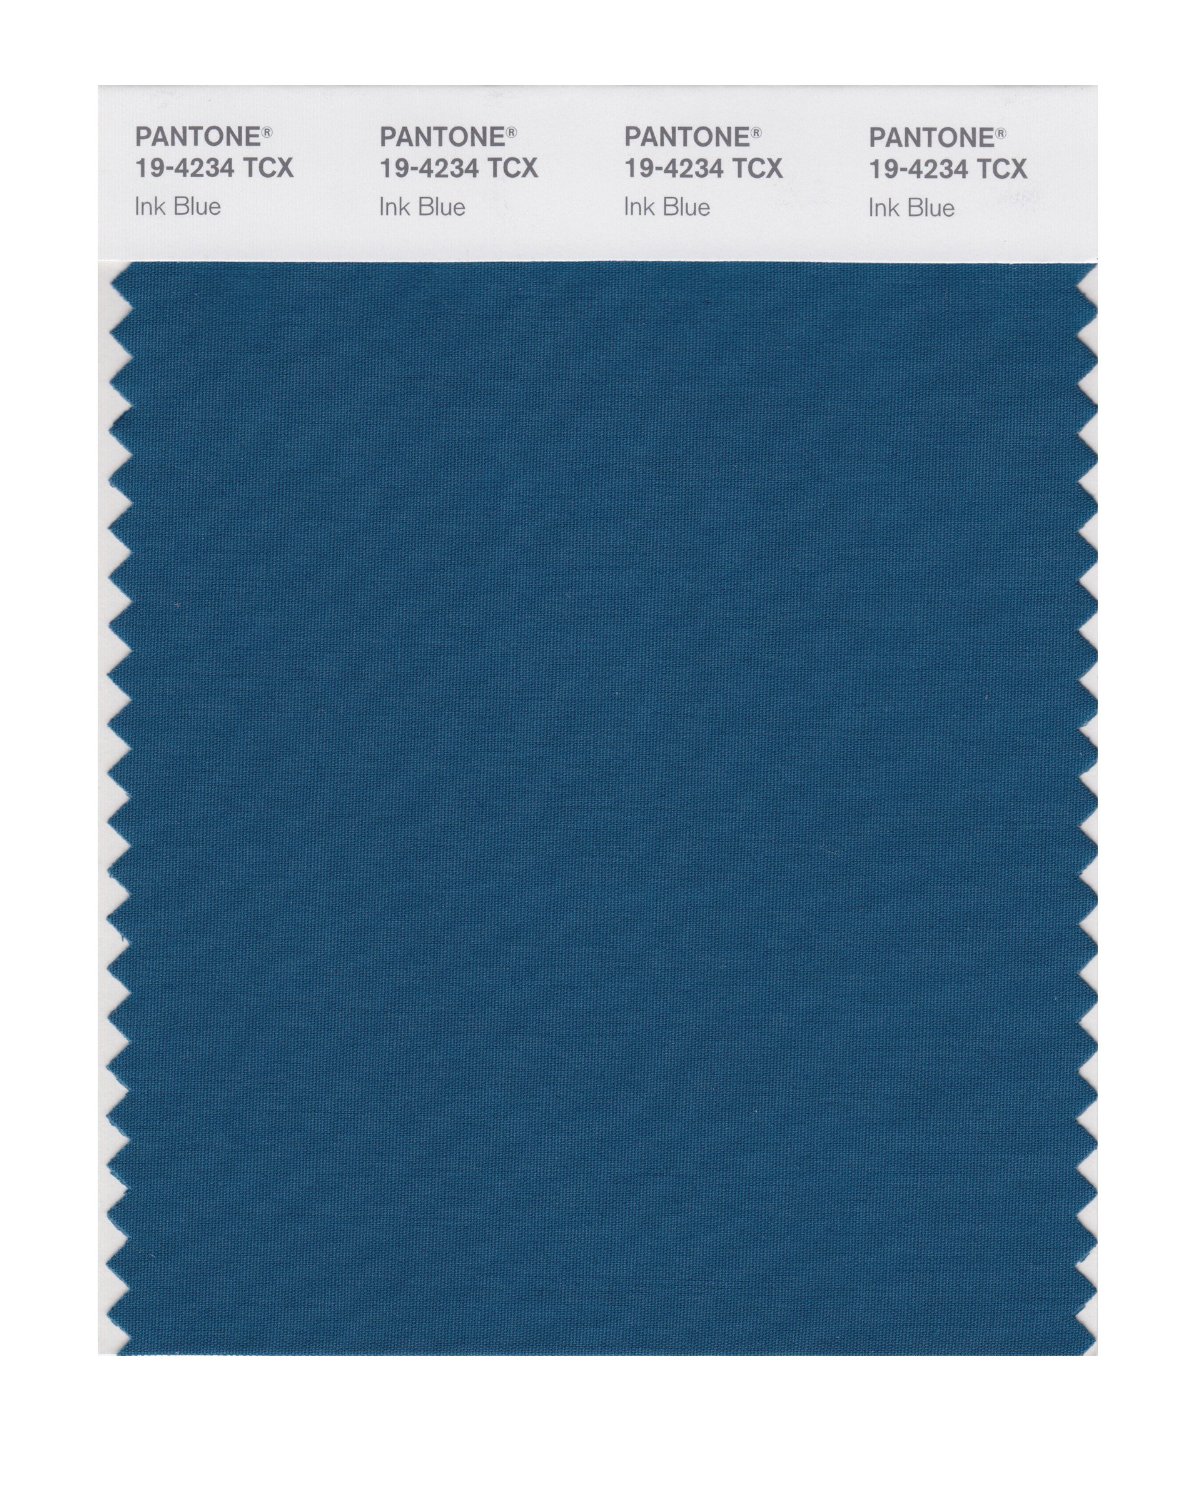 Pantone Cotton Swatch 19-4234 Ink Blue